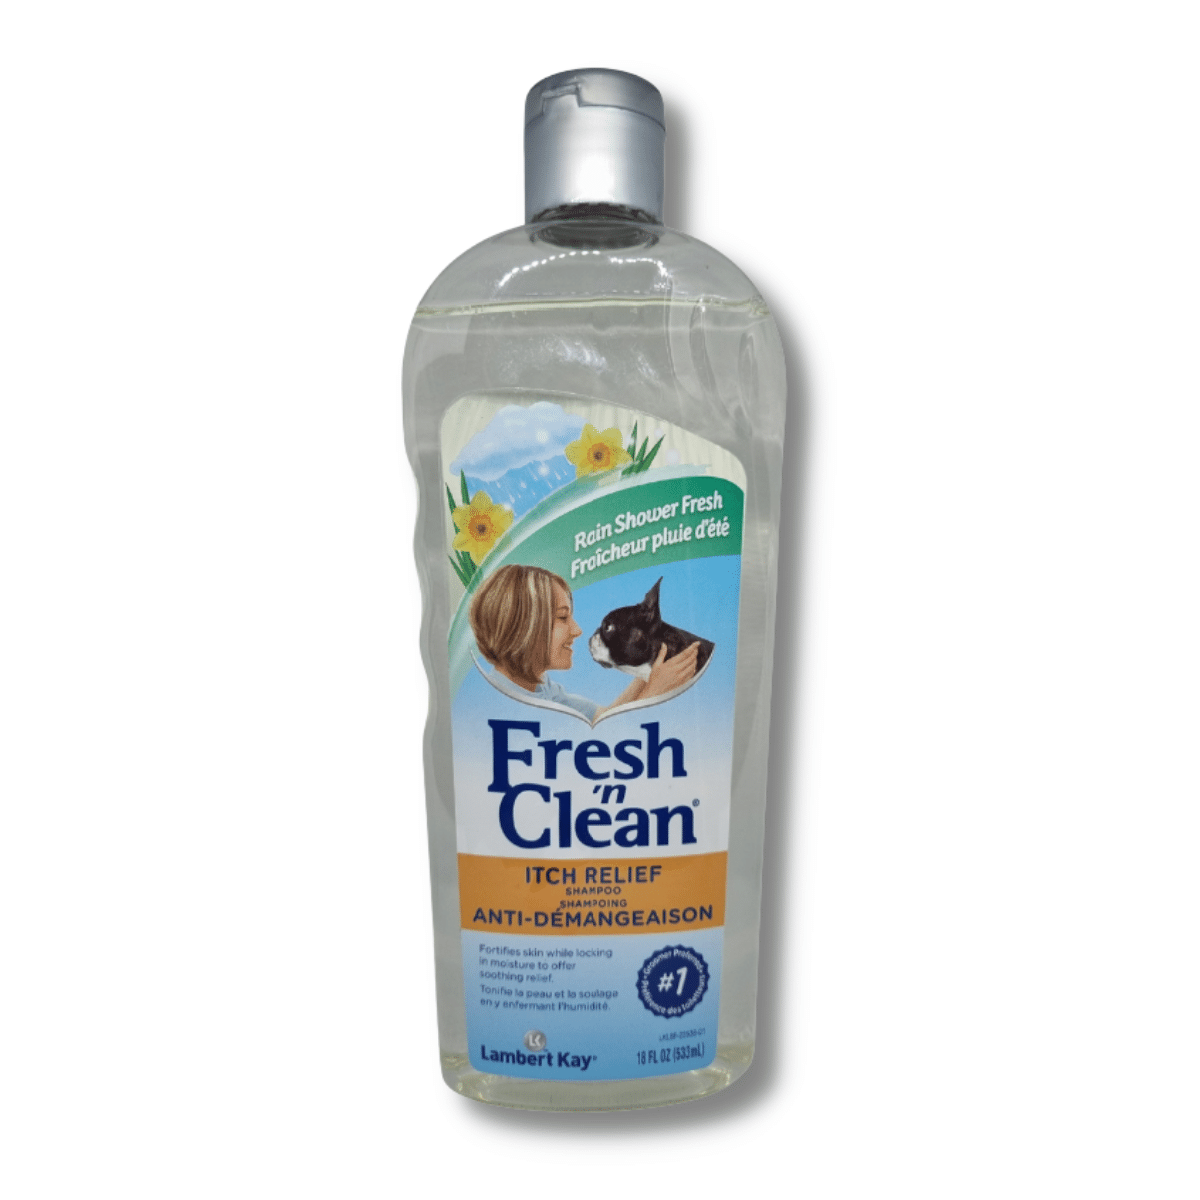 Lambert Kay Fresh 'n Clean Itch Relief: Rain Shower Fresh (533mL)